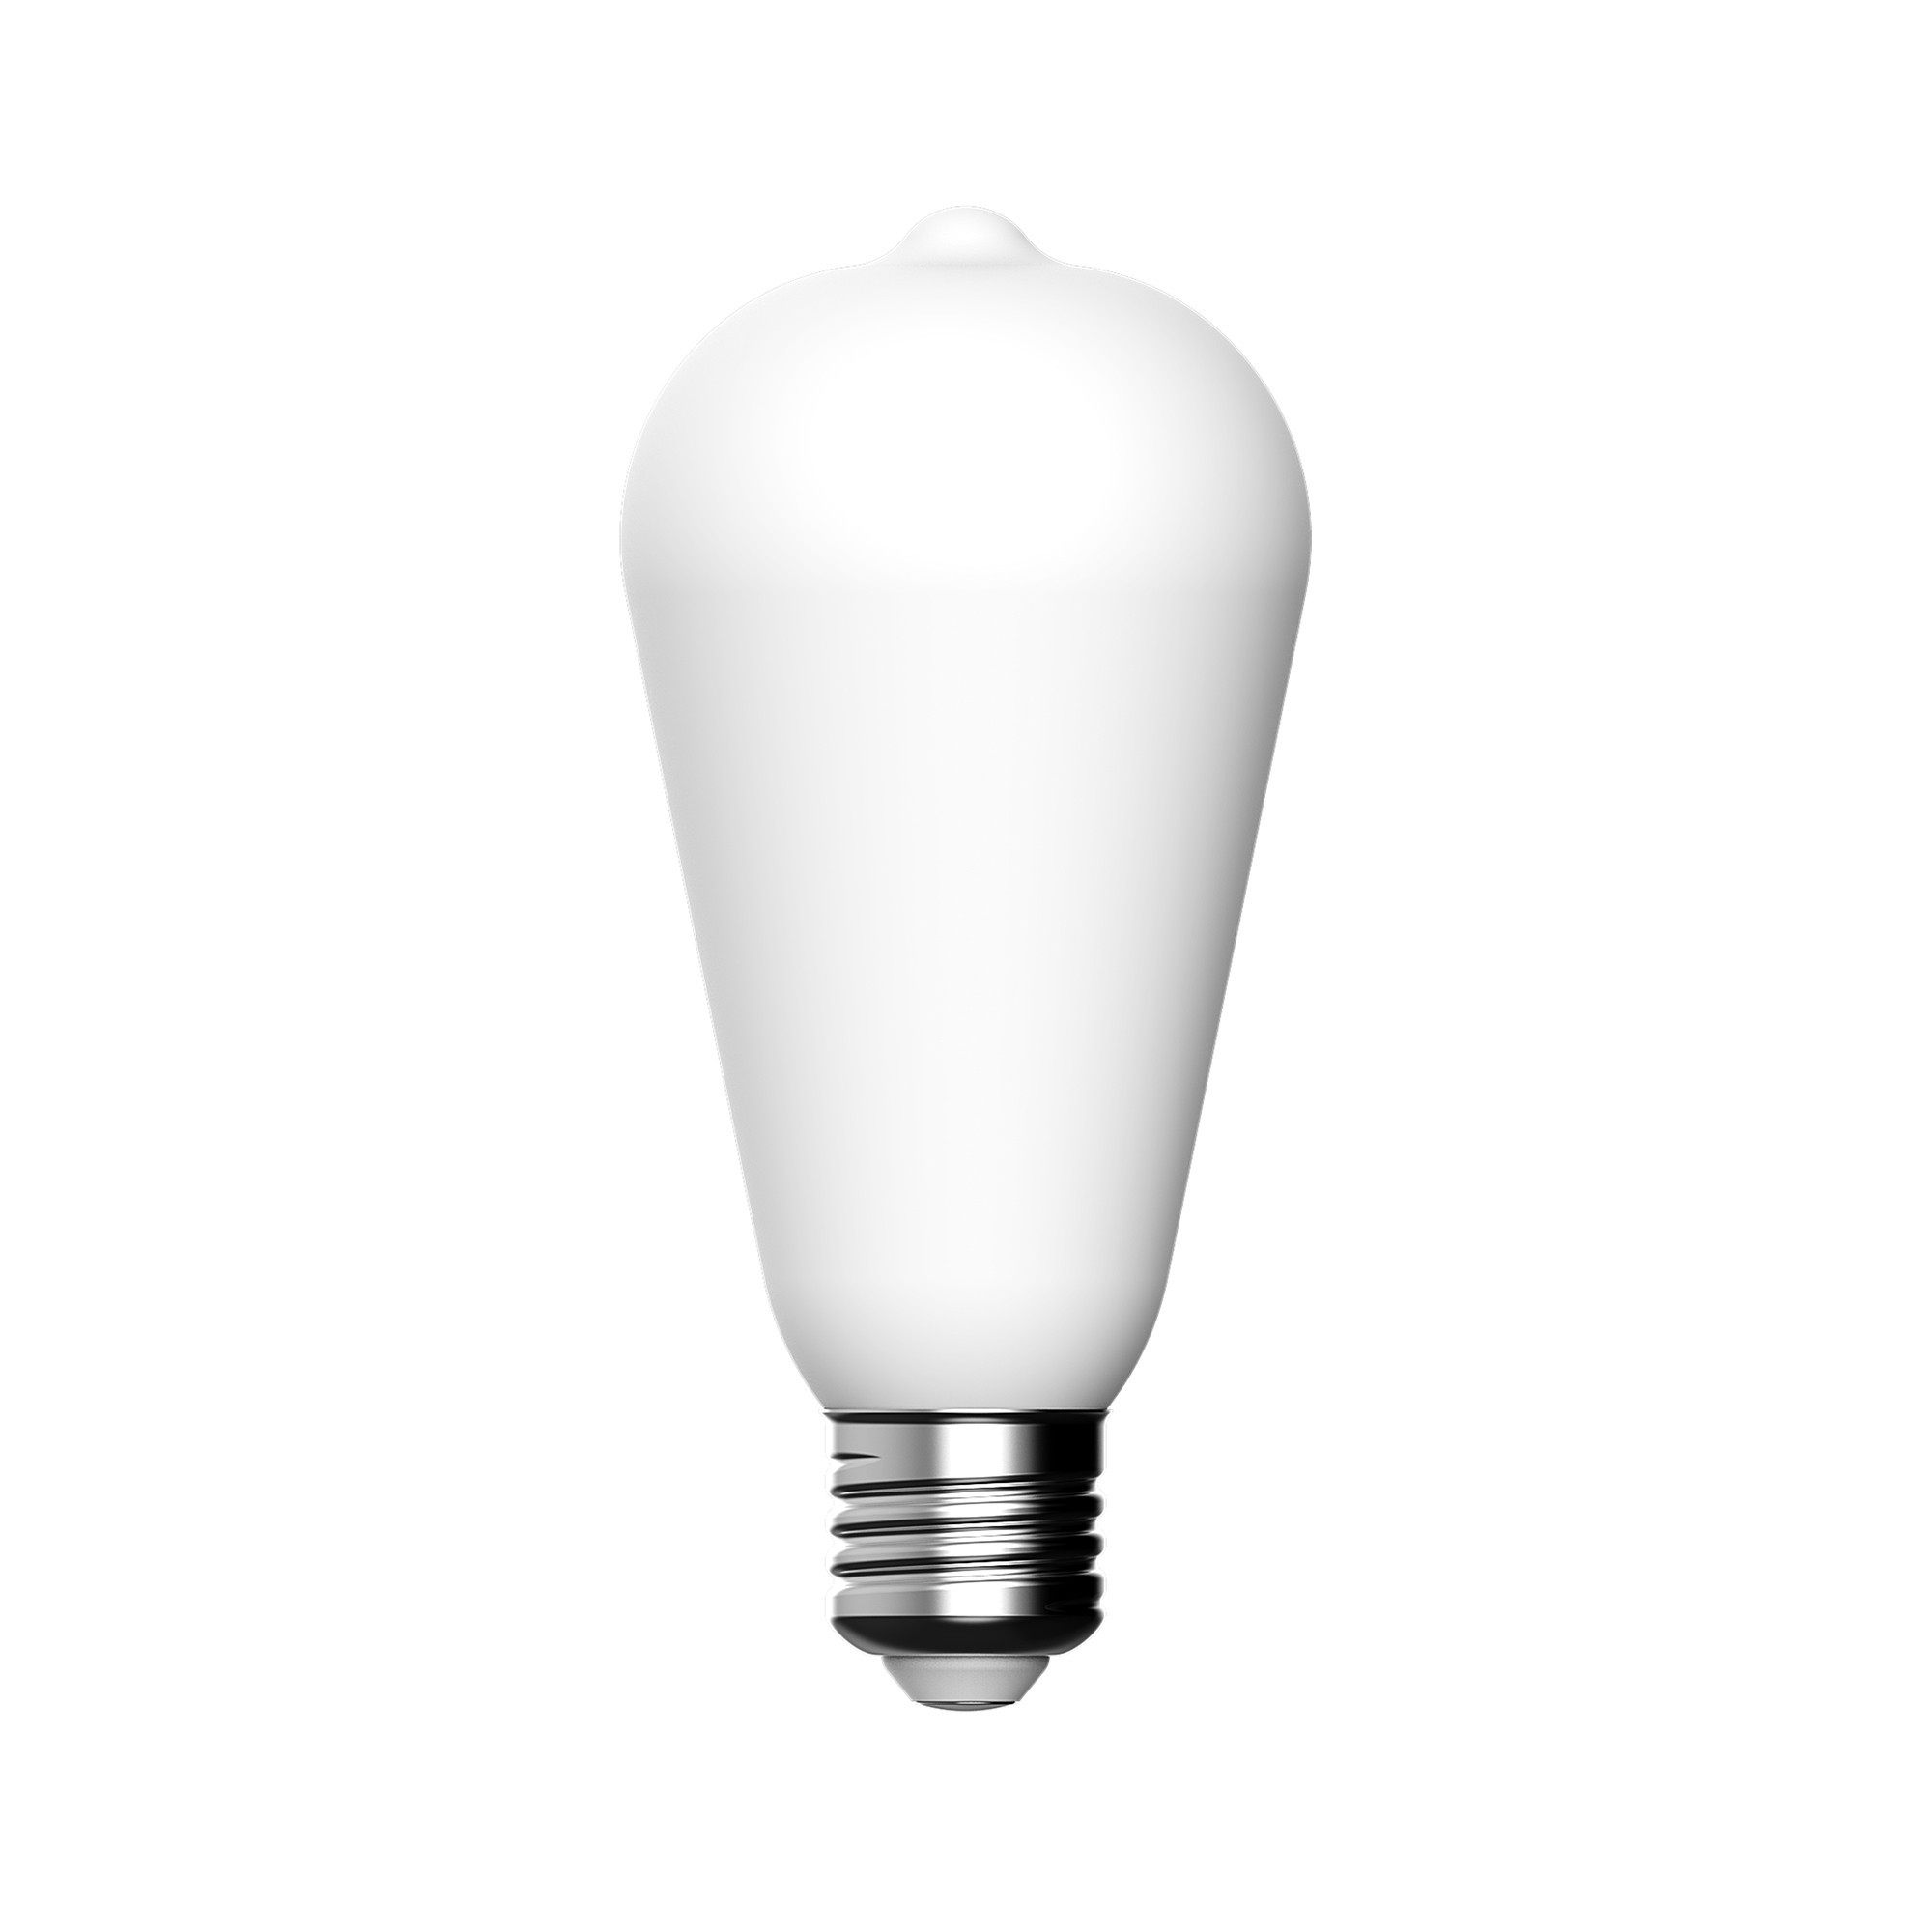 P02 - LED Light Bulb ST64, E27, 7W, 2700K, 640Lm, porcelain effect